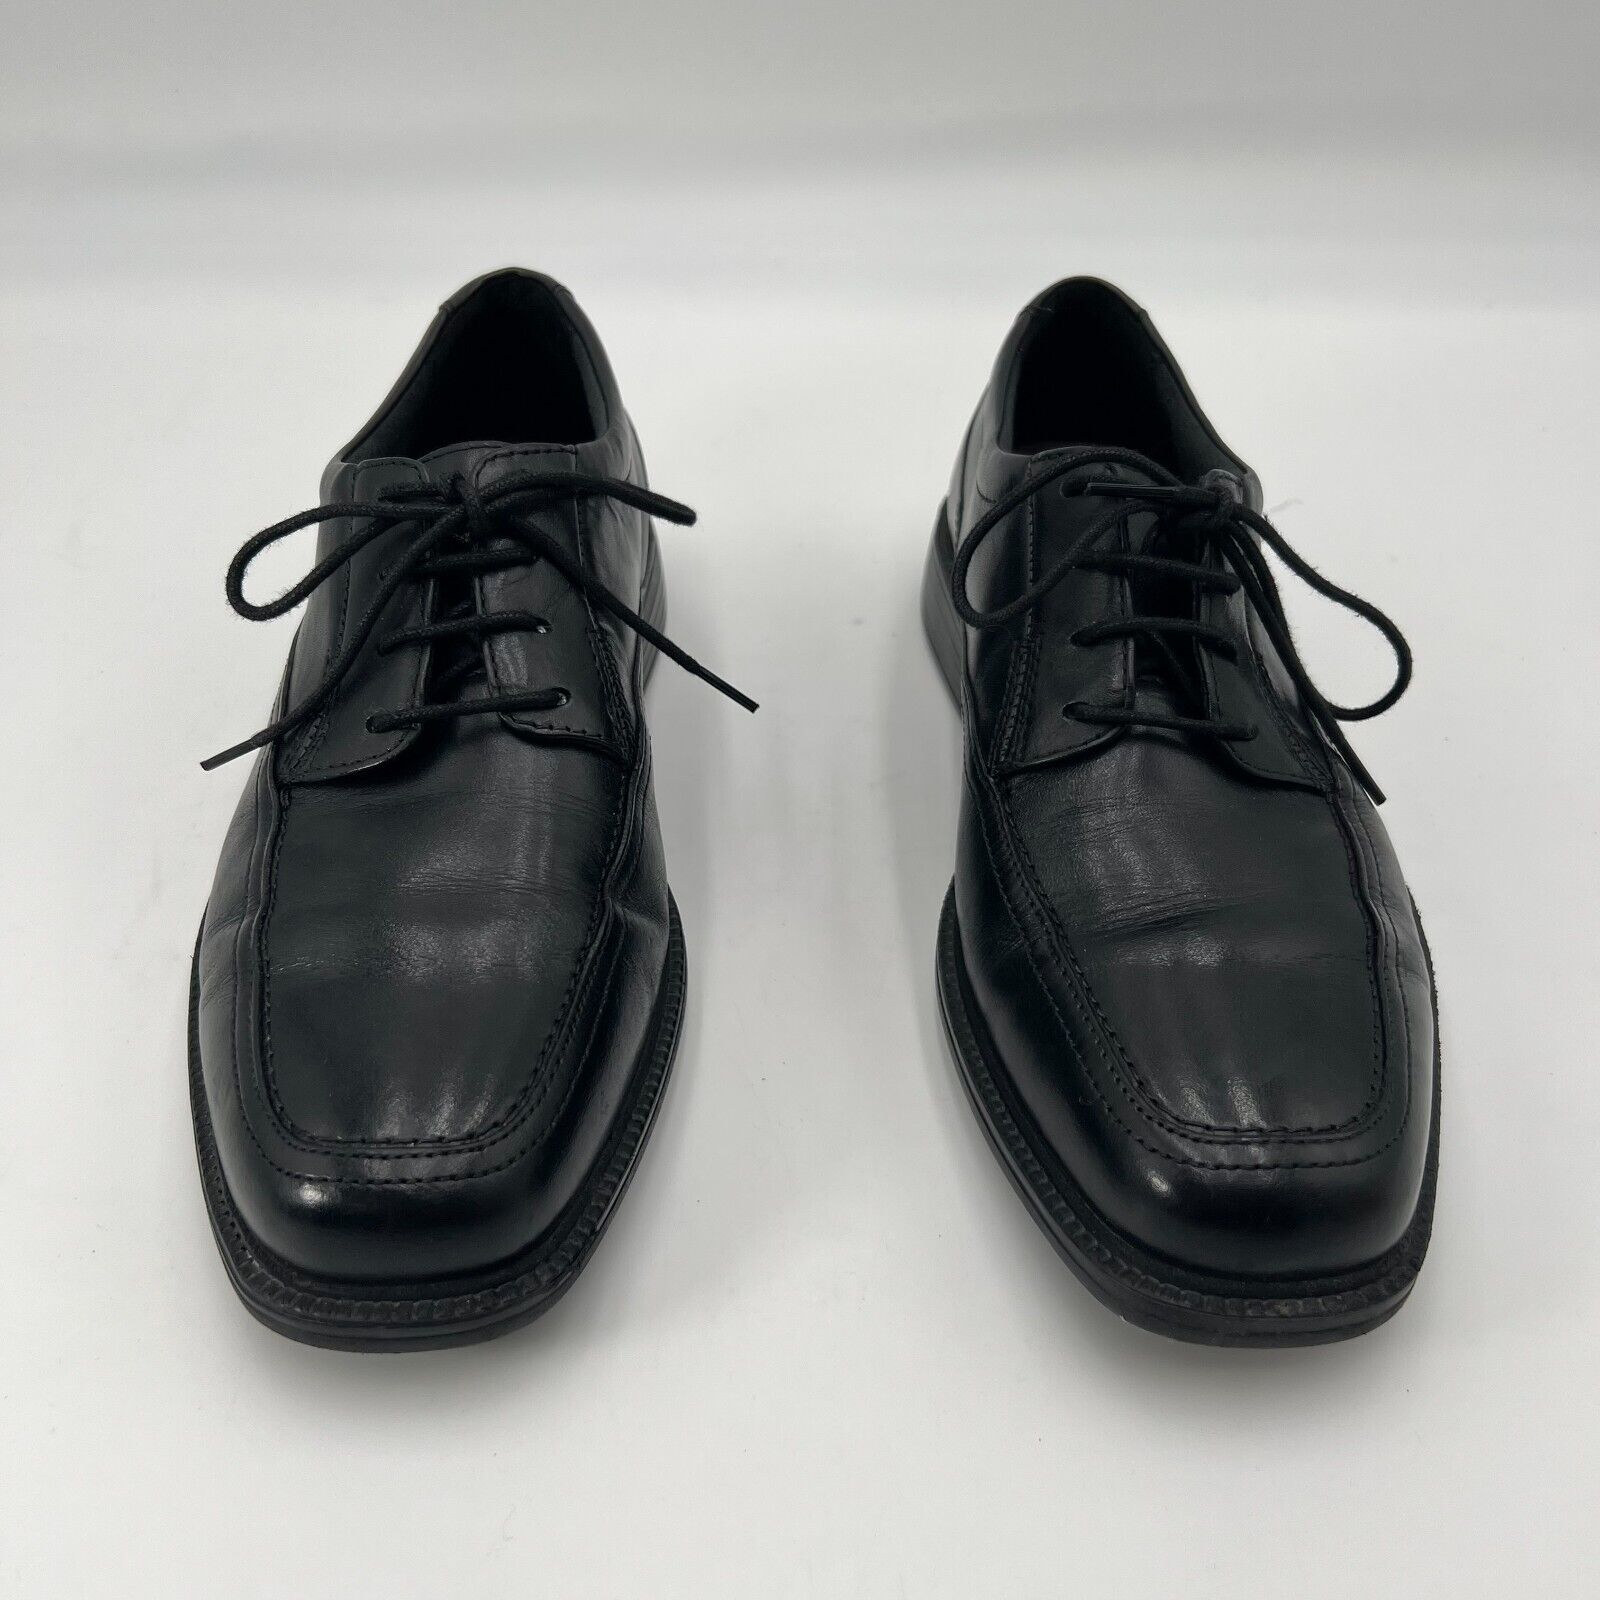 Bostonian Flexlite 8M young mens/teen black leather Wenham cap oxford dress shoe